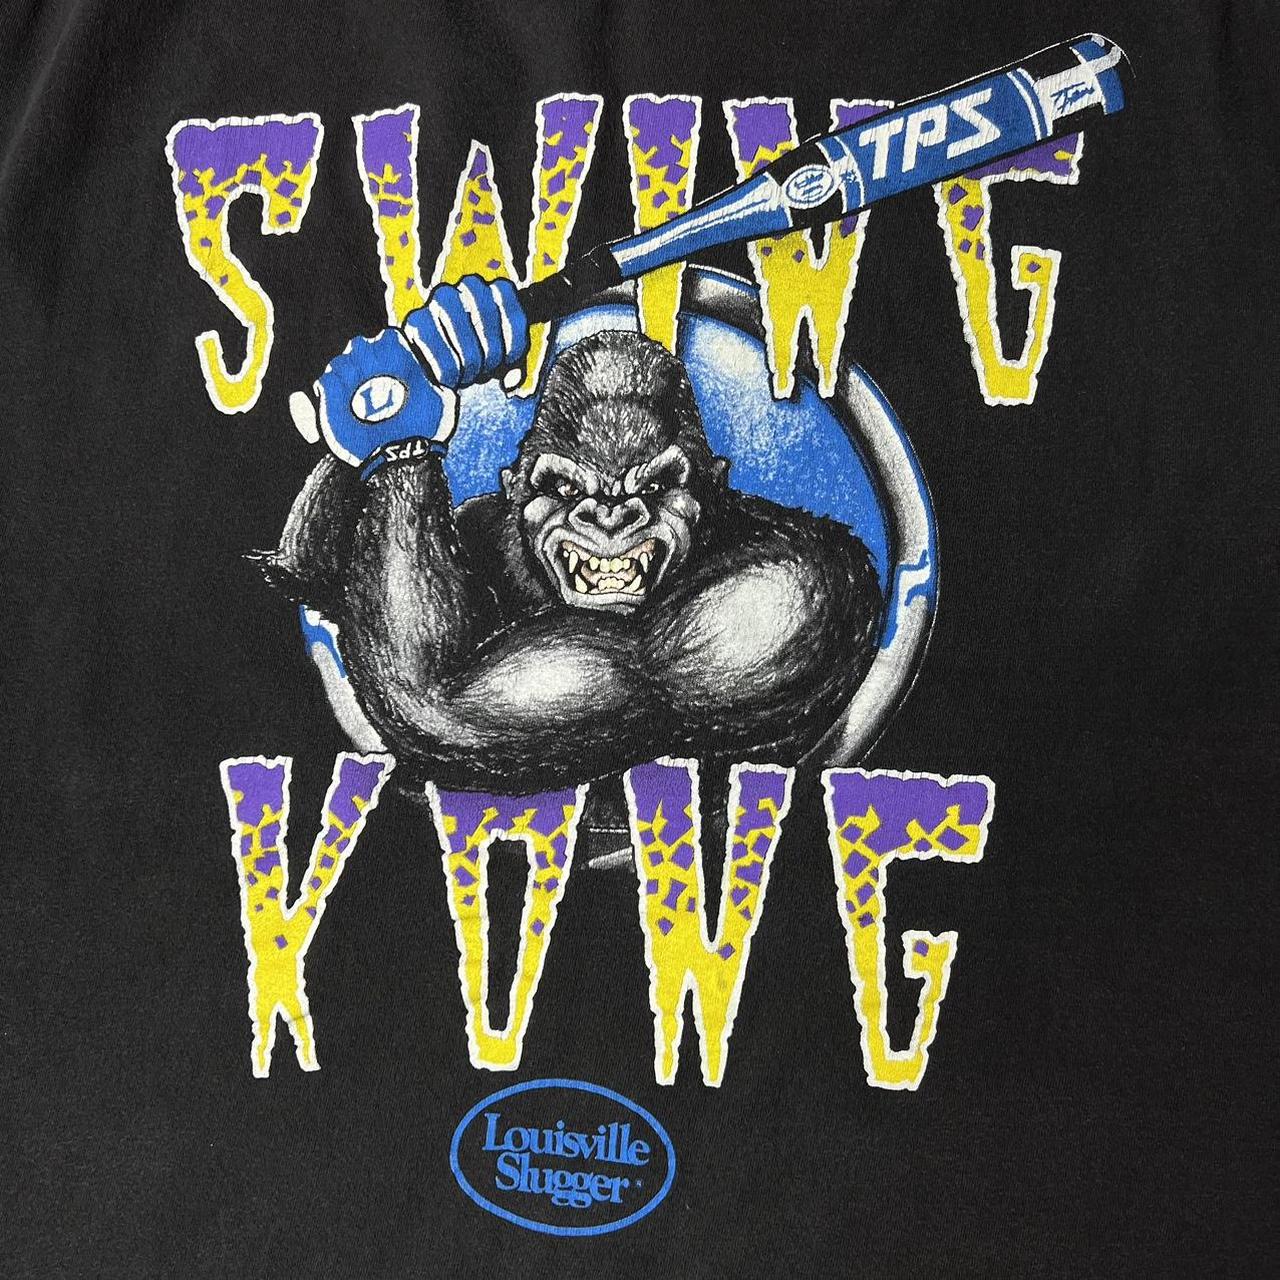 GreatWhiteVintage 90s Louisville Slugger Baseball Tshirt